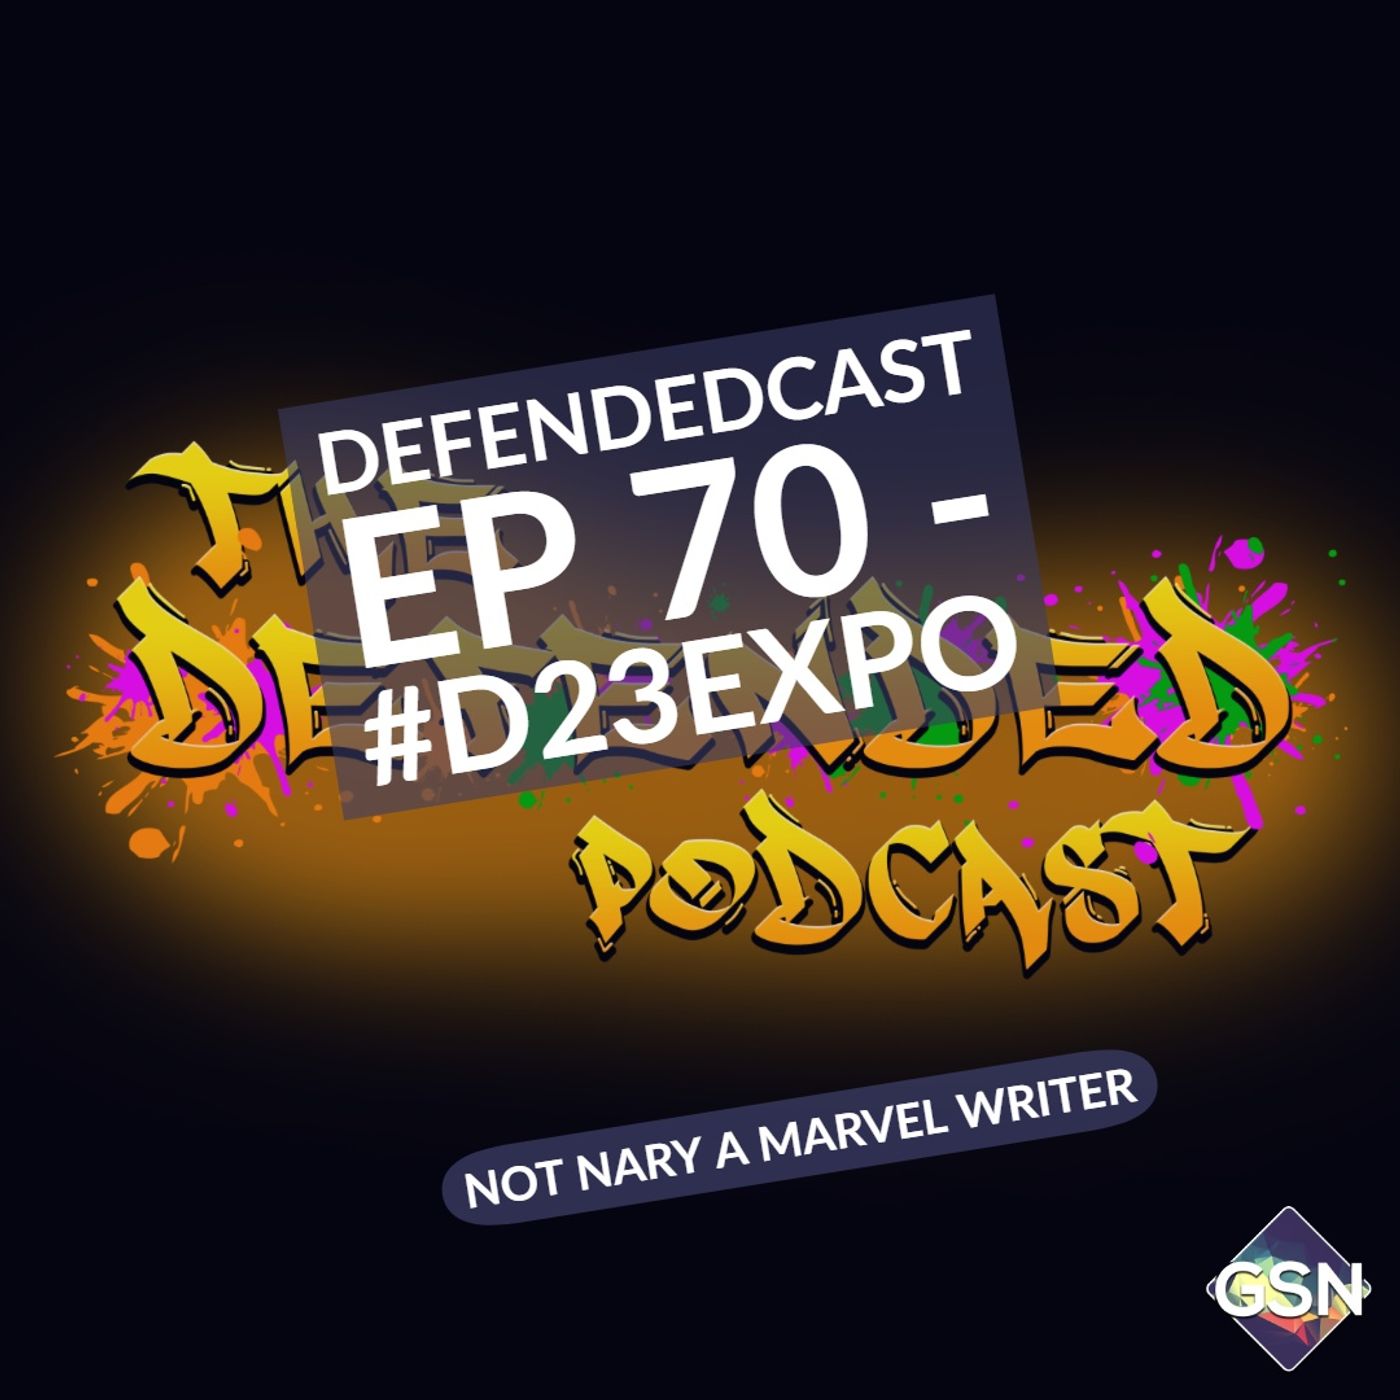 Defendedcast Ep 70 - #D23Expo